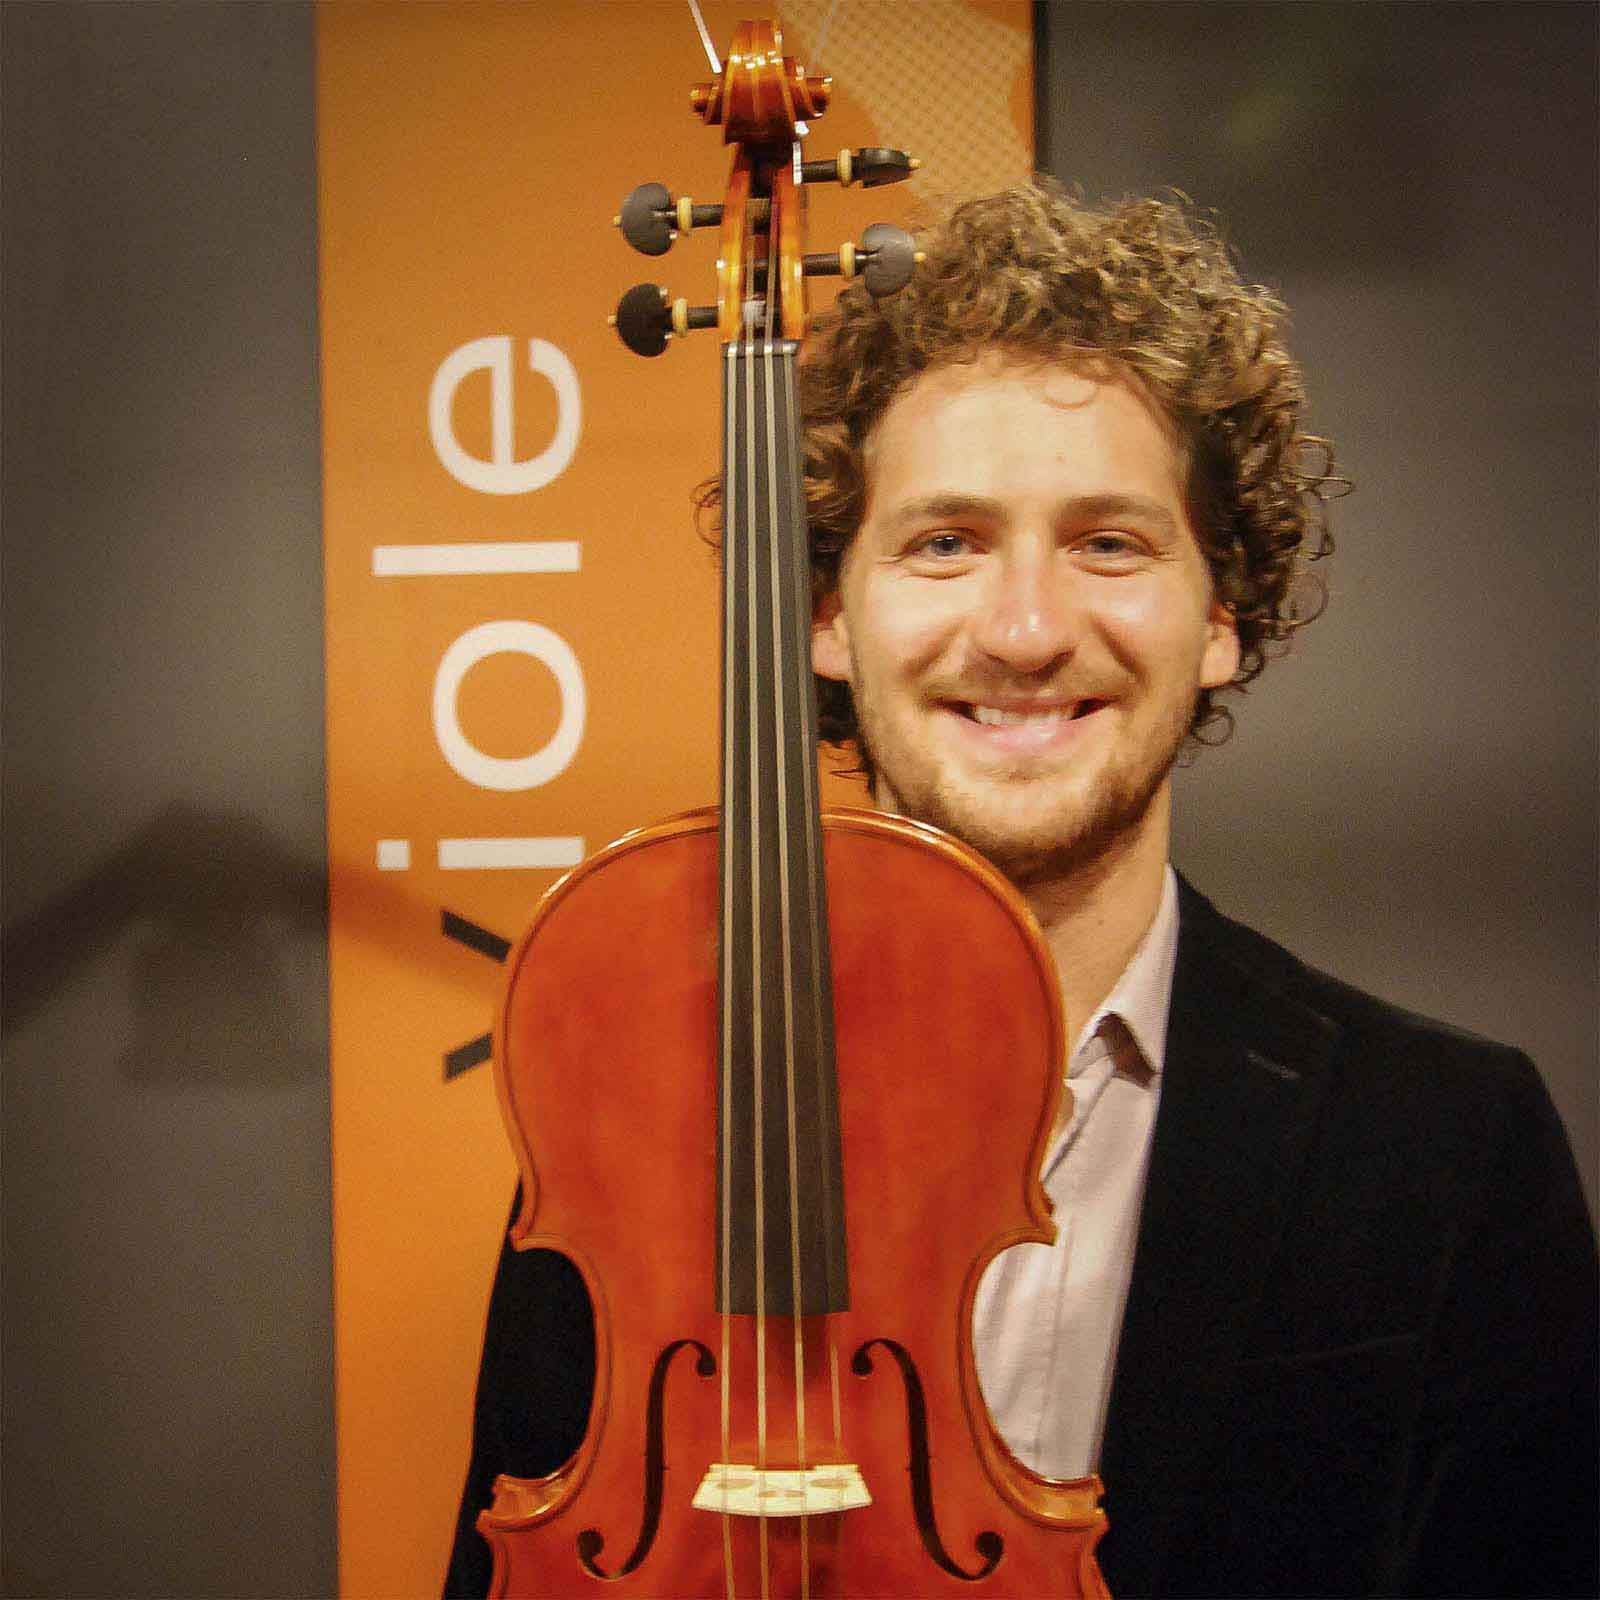 Triennale International Competition Model Pietro Guarneri da Venezia “Best Viola Sound“ - Image 15